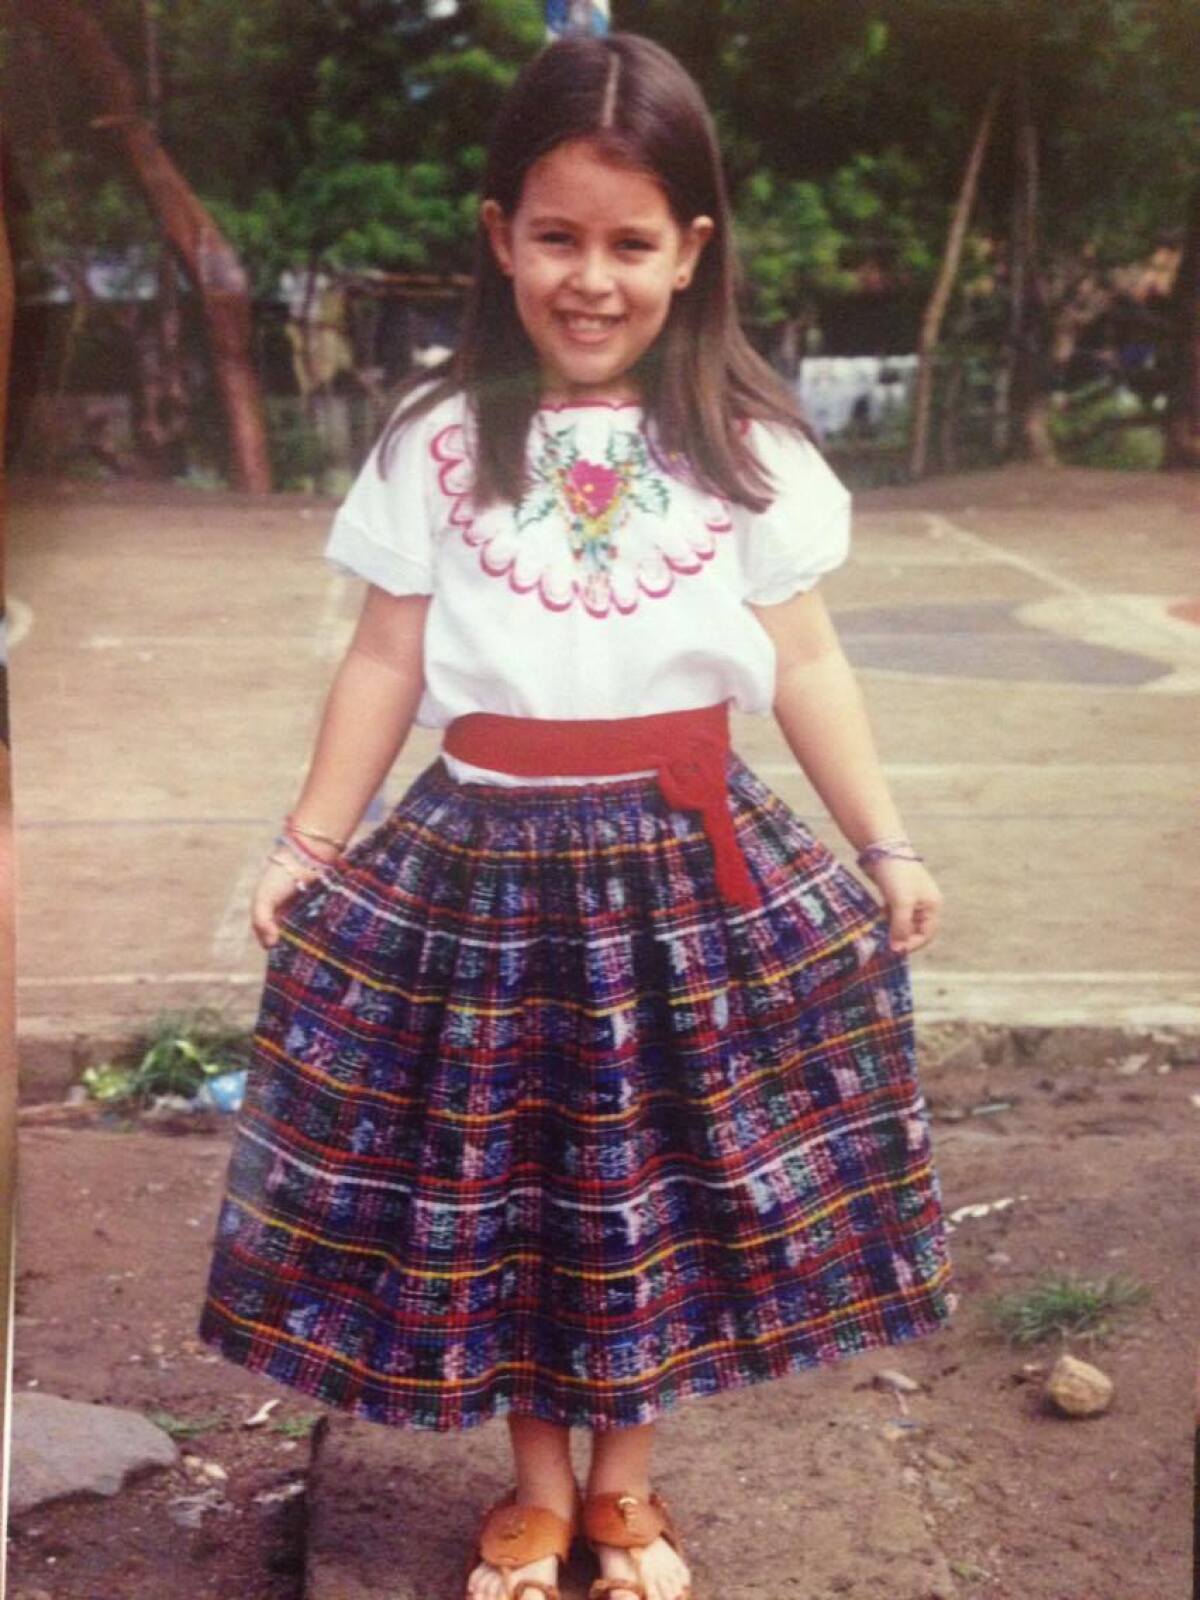 Arteaga as a little girl wearing traditional Guatemalan cultural clothing.